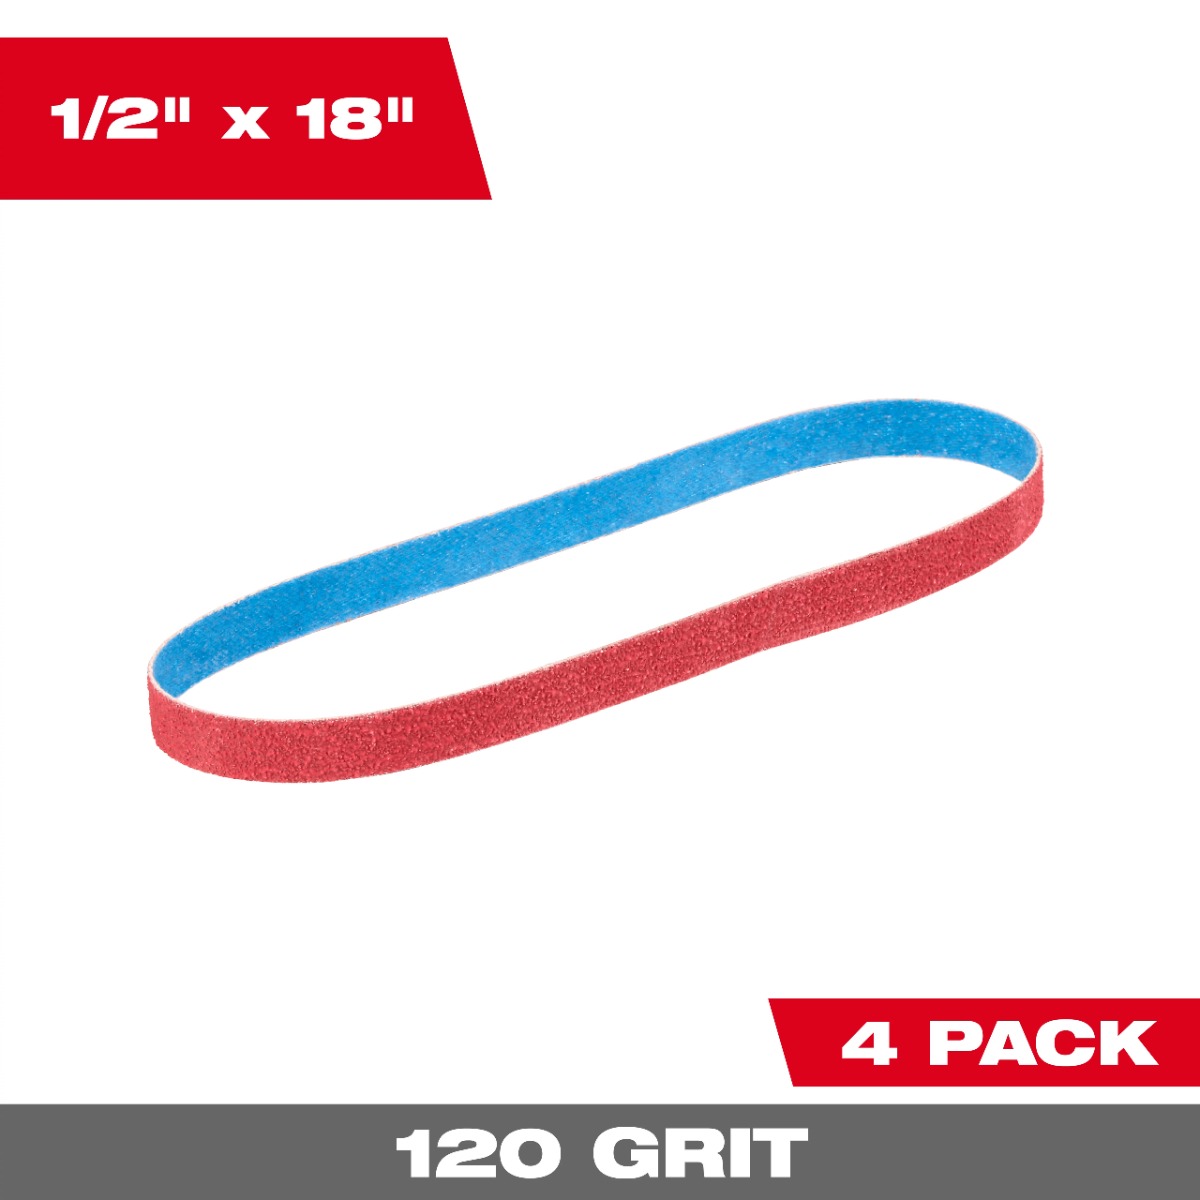 1/2” x 18” 120 Grit Bandfile Belts – 4 pack